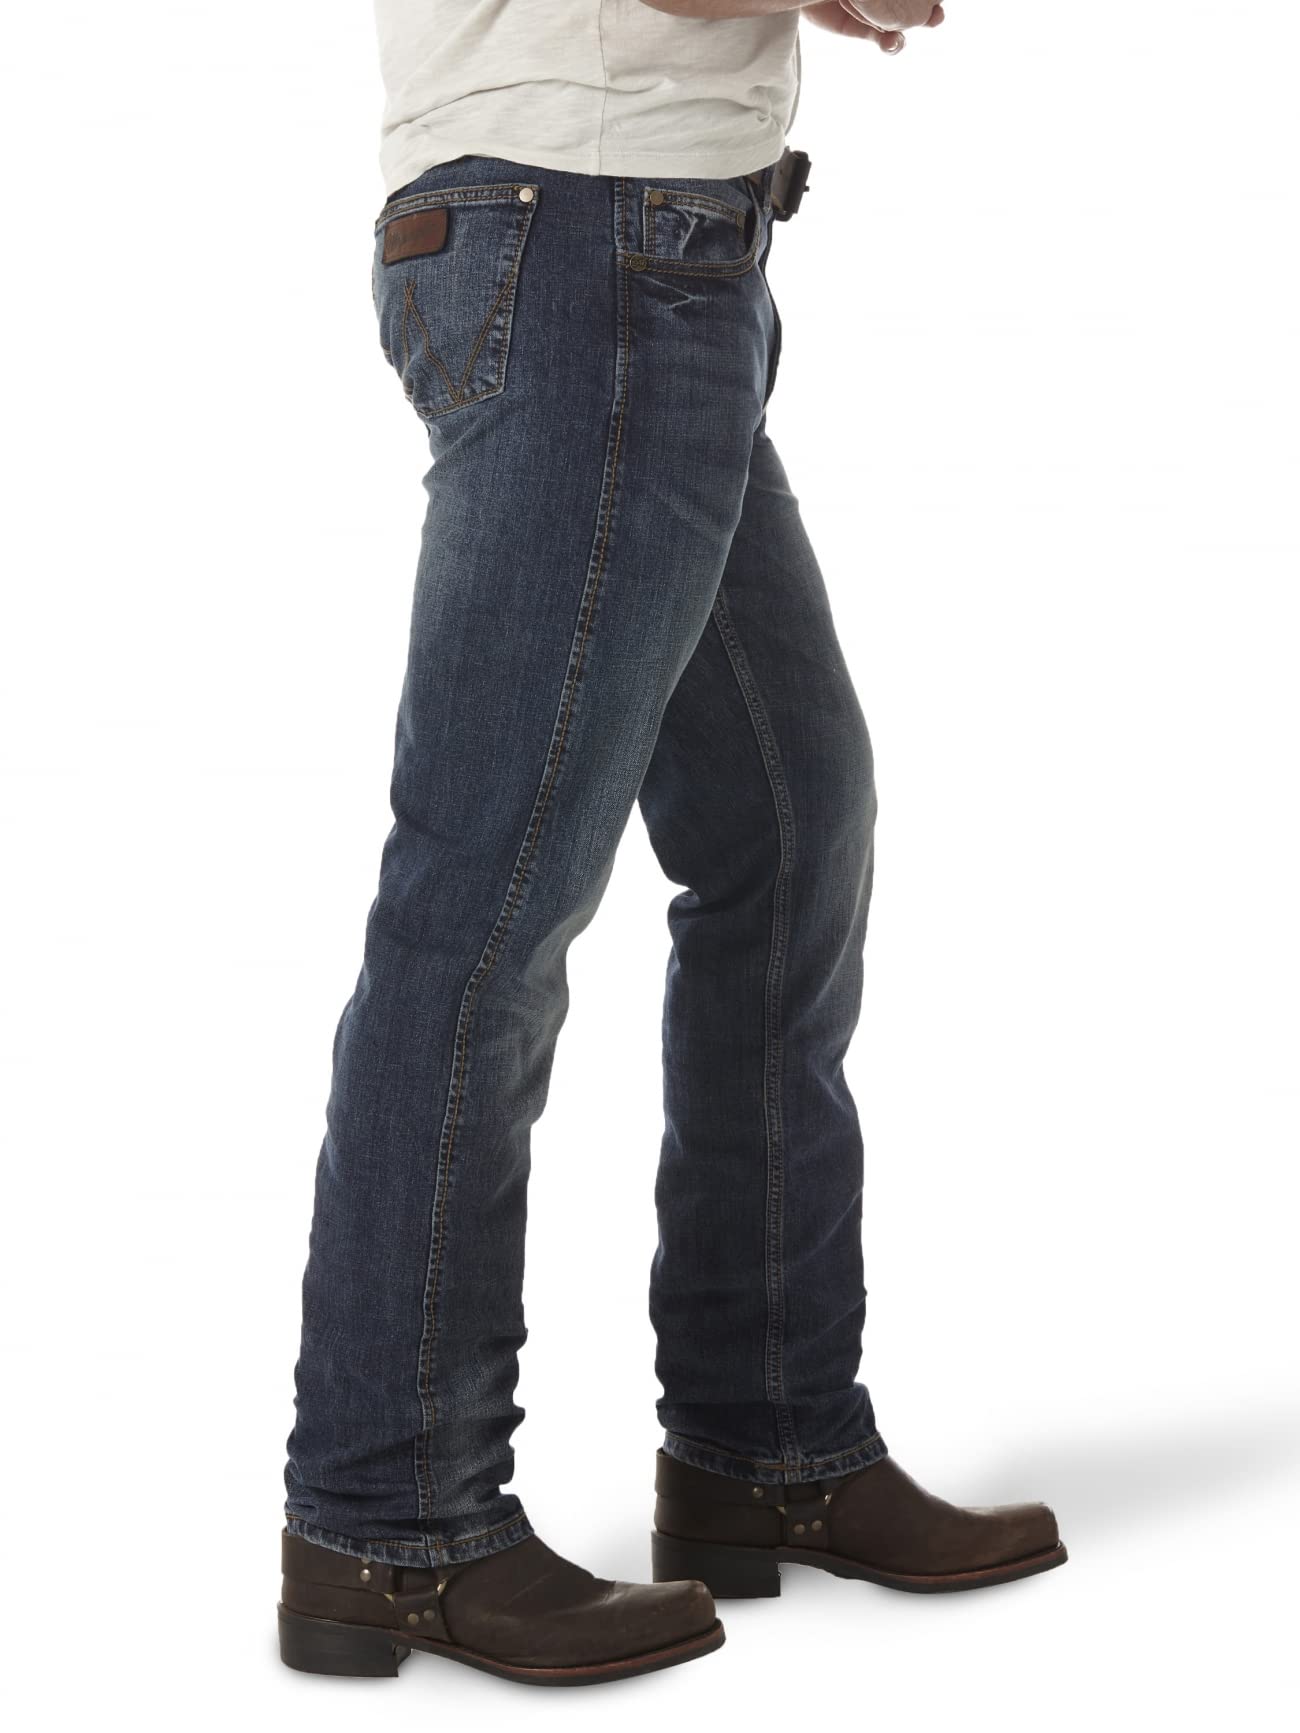 Wrangler Men's Retro Slim Fit Straight Leg Jean, Bozeman, 34W x 30L